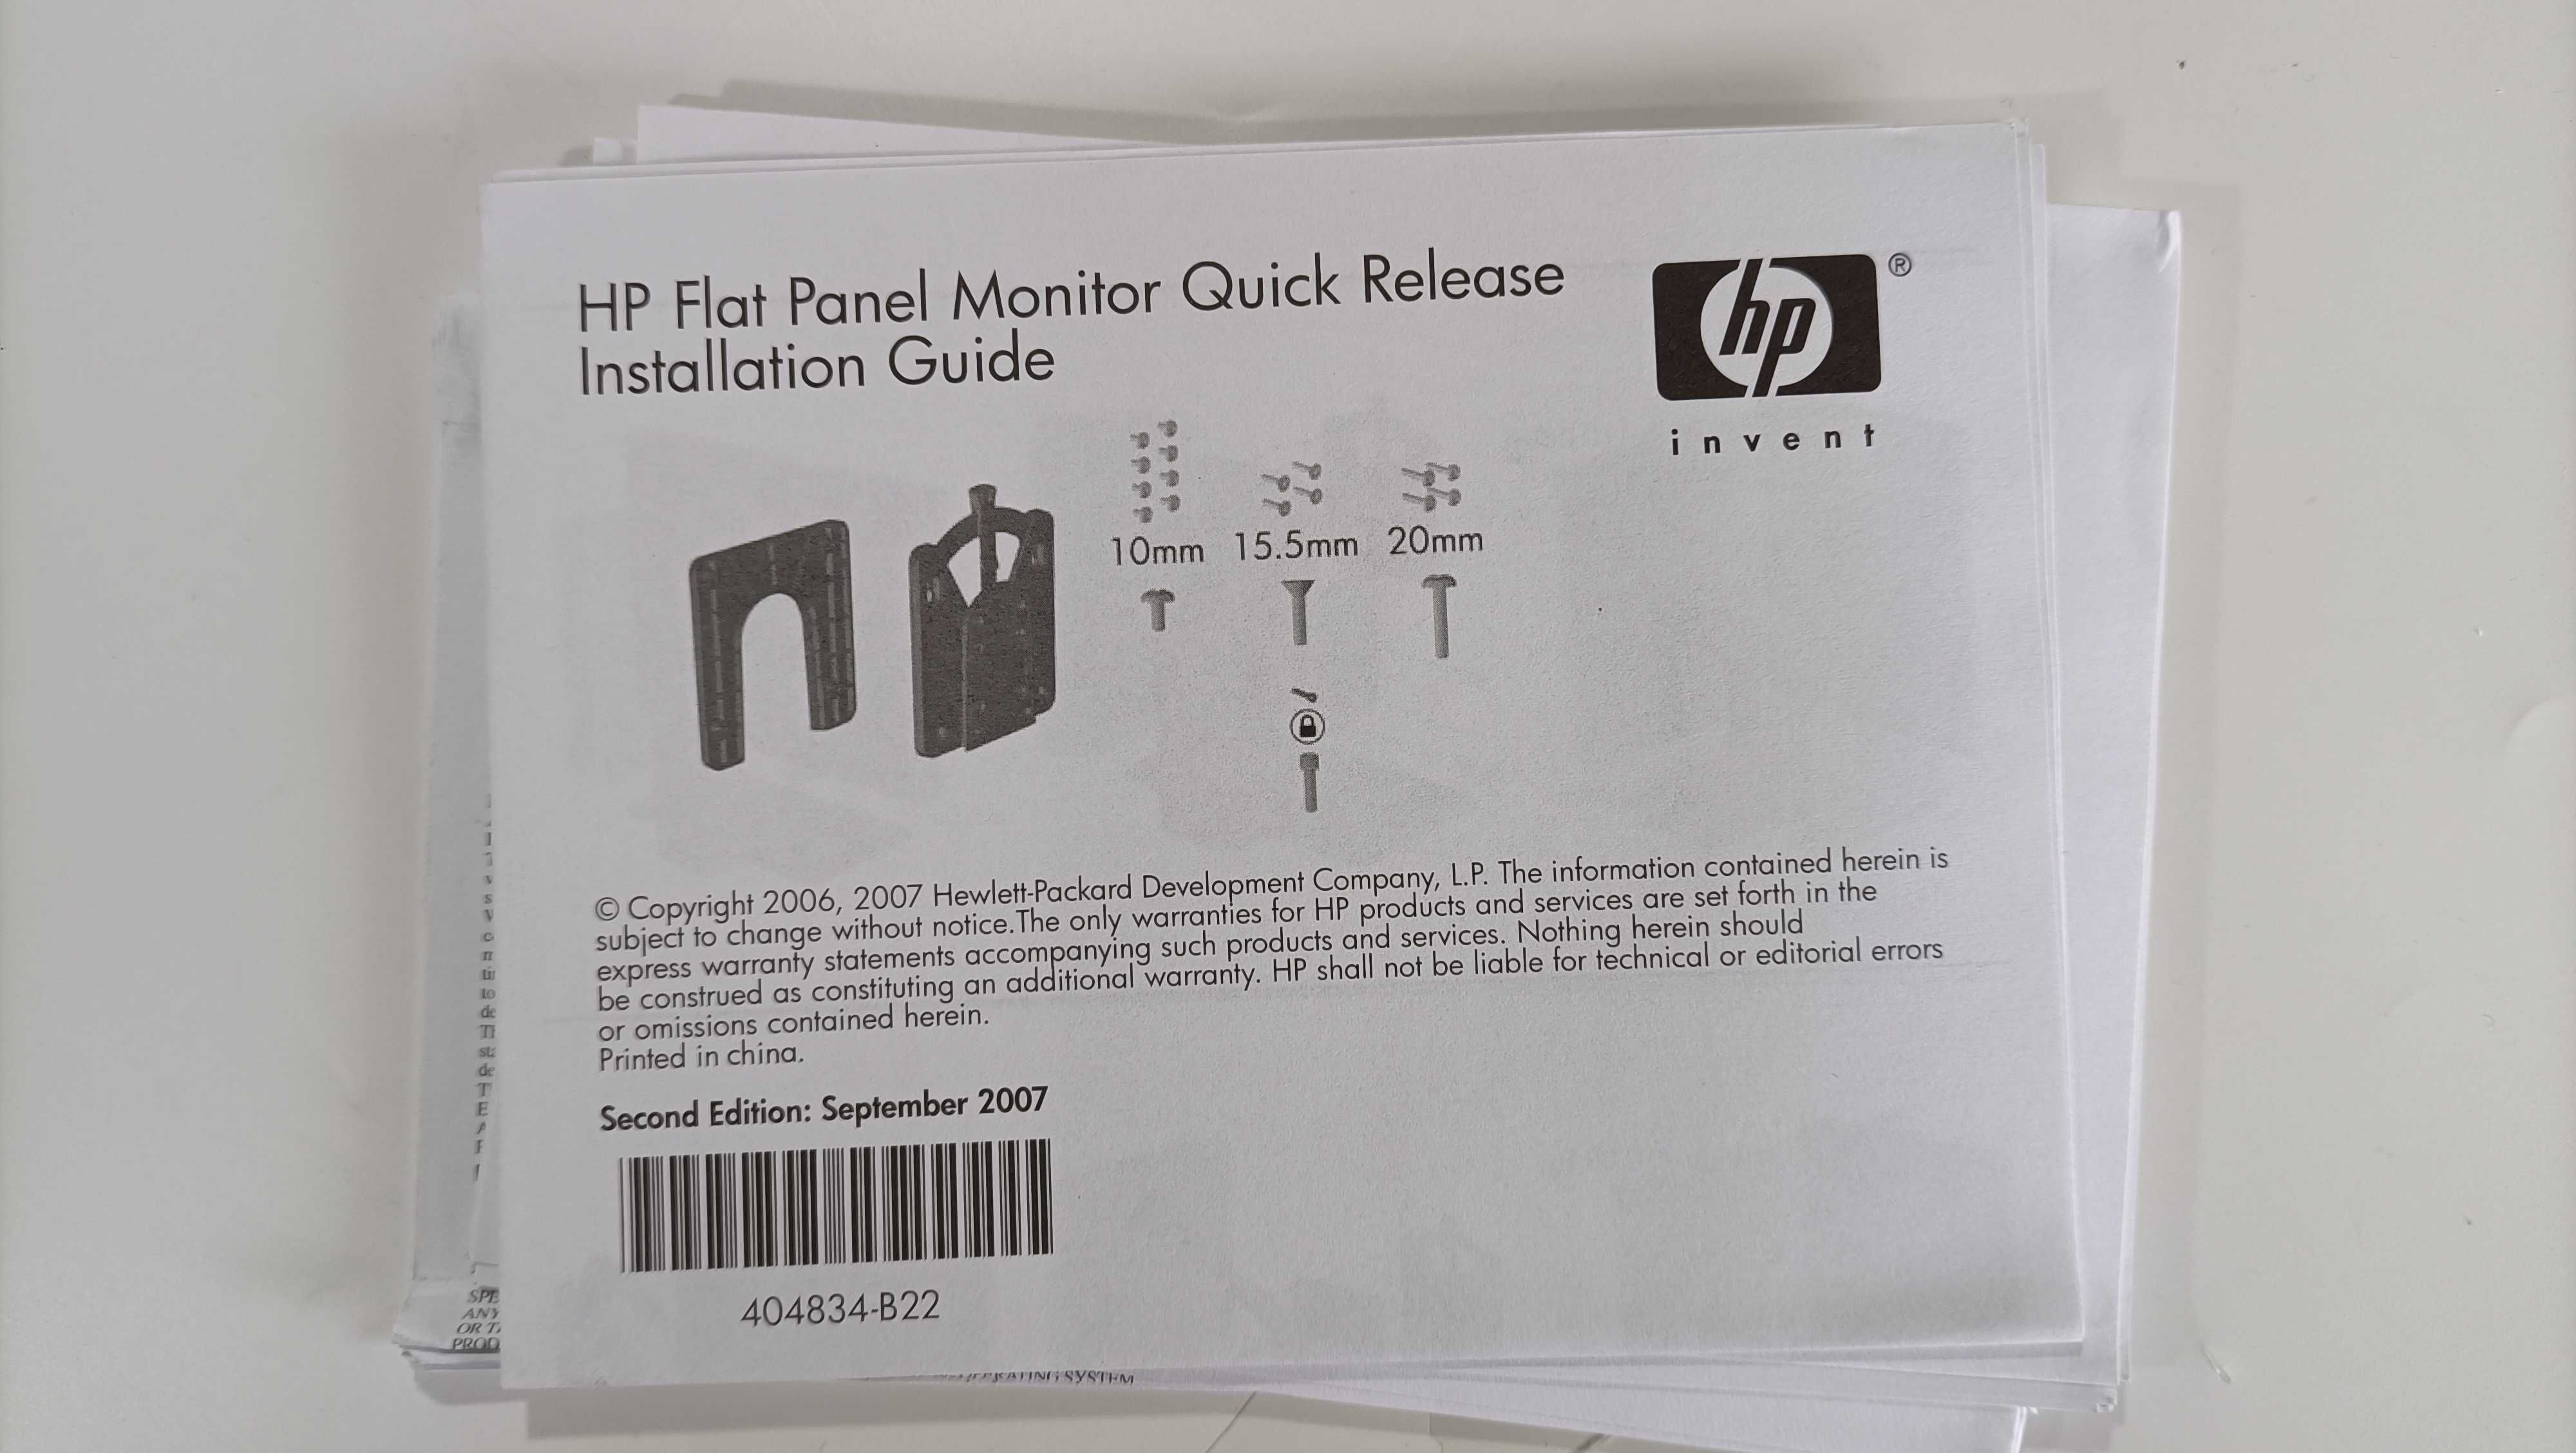 Suporte VESA HP Quick Release monitor mount